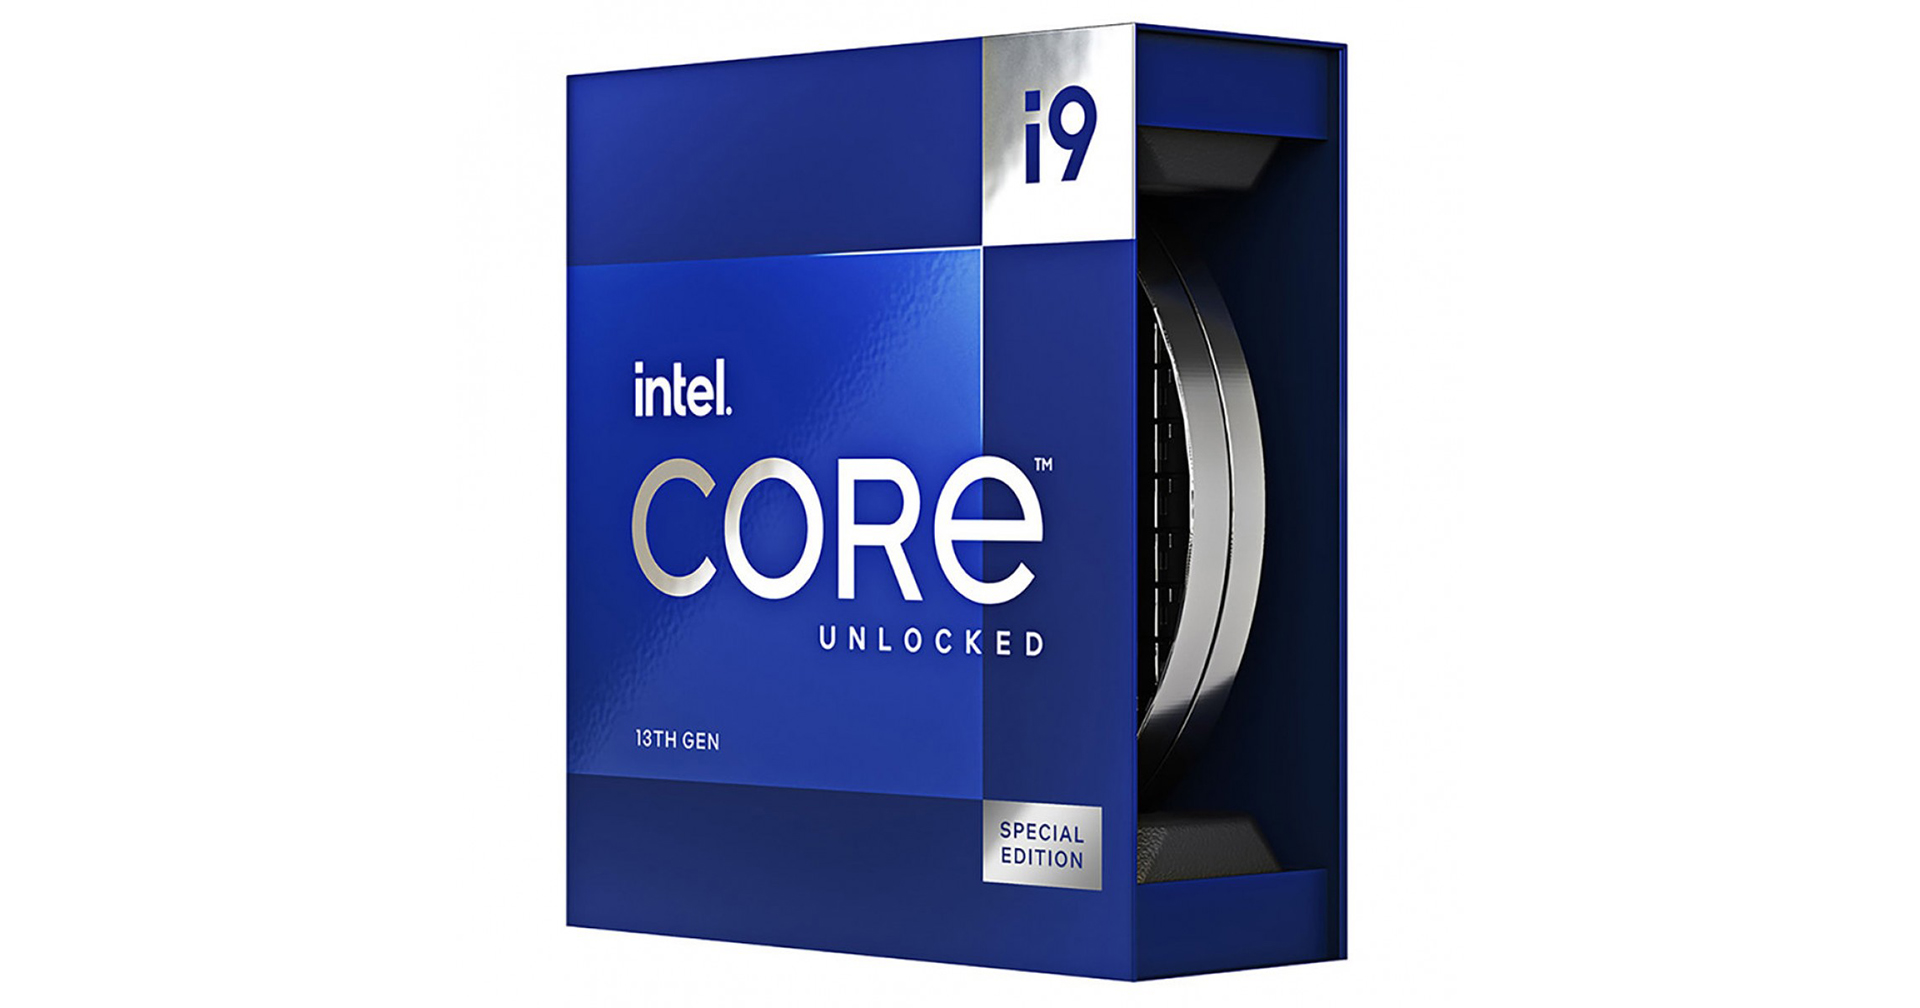 Intel เปิดตัว Core i9-13900KS : ซีพียูตัวแรกของโลกที่มีความเร็วถึง 6.0 GHz